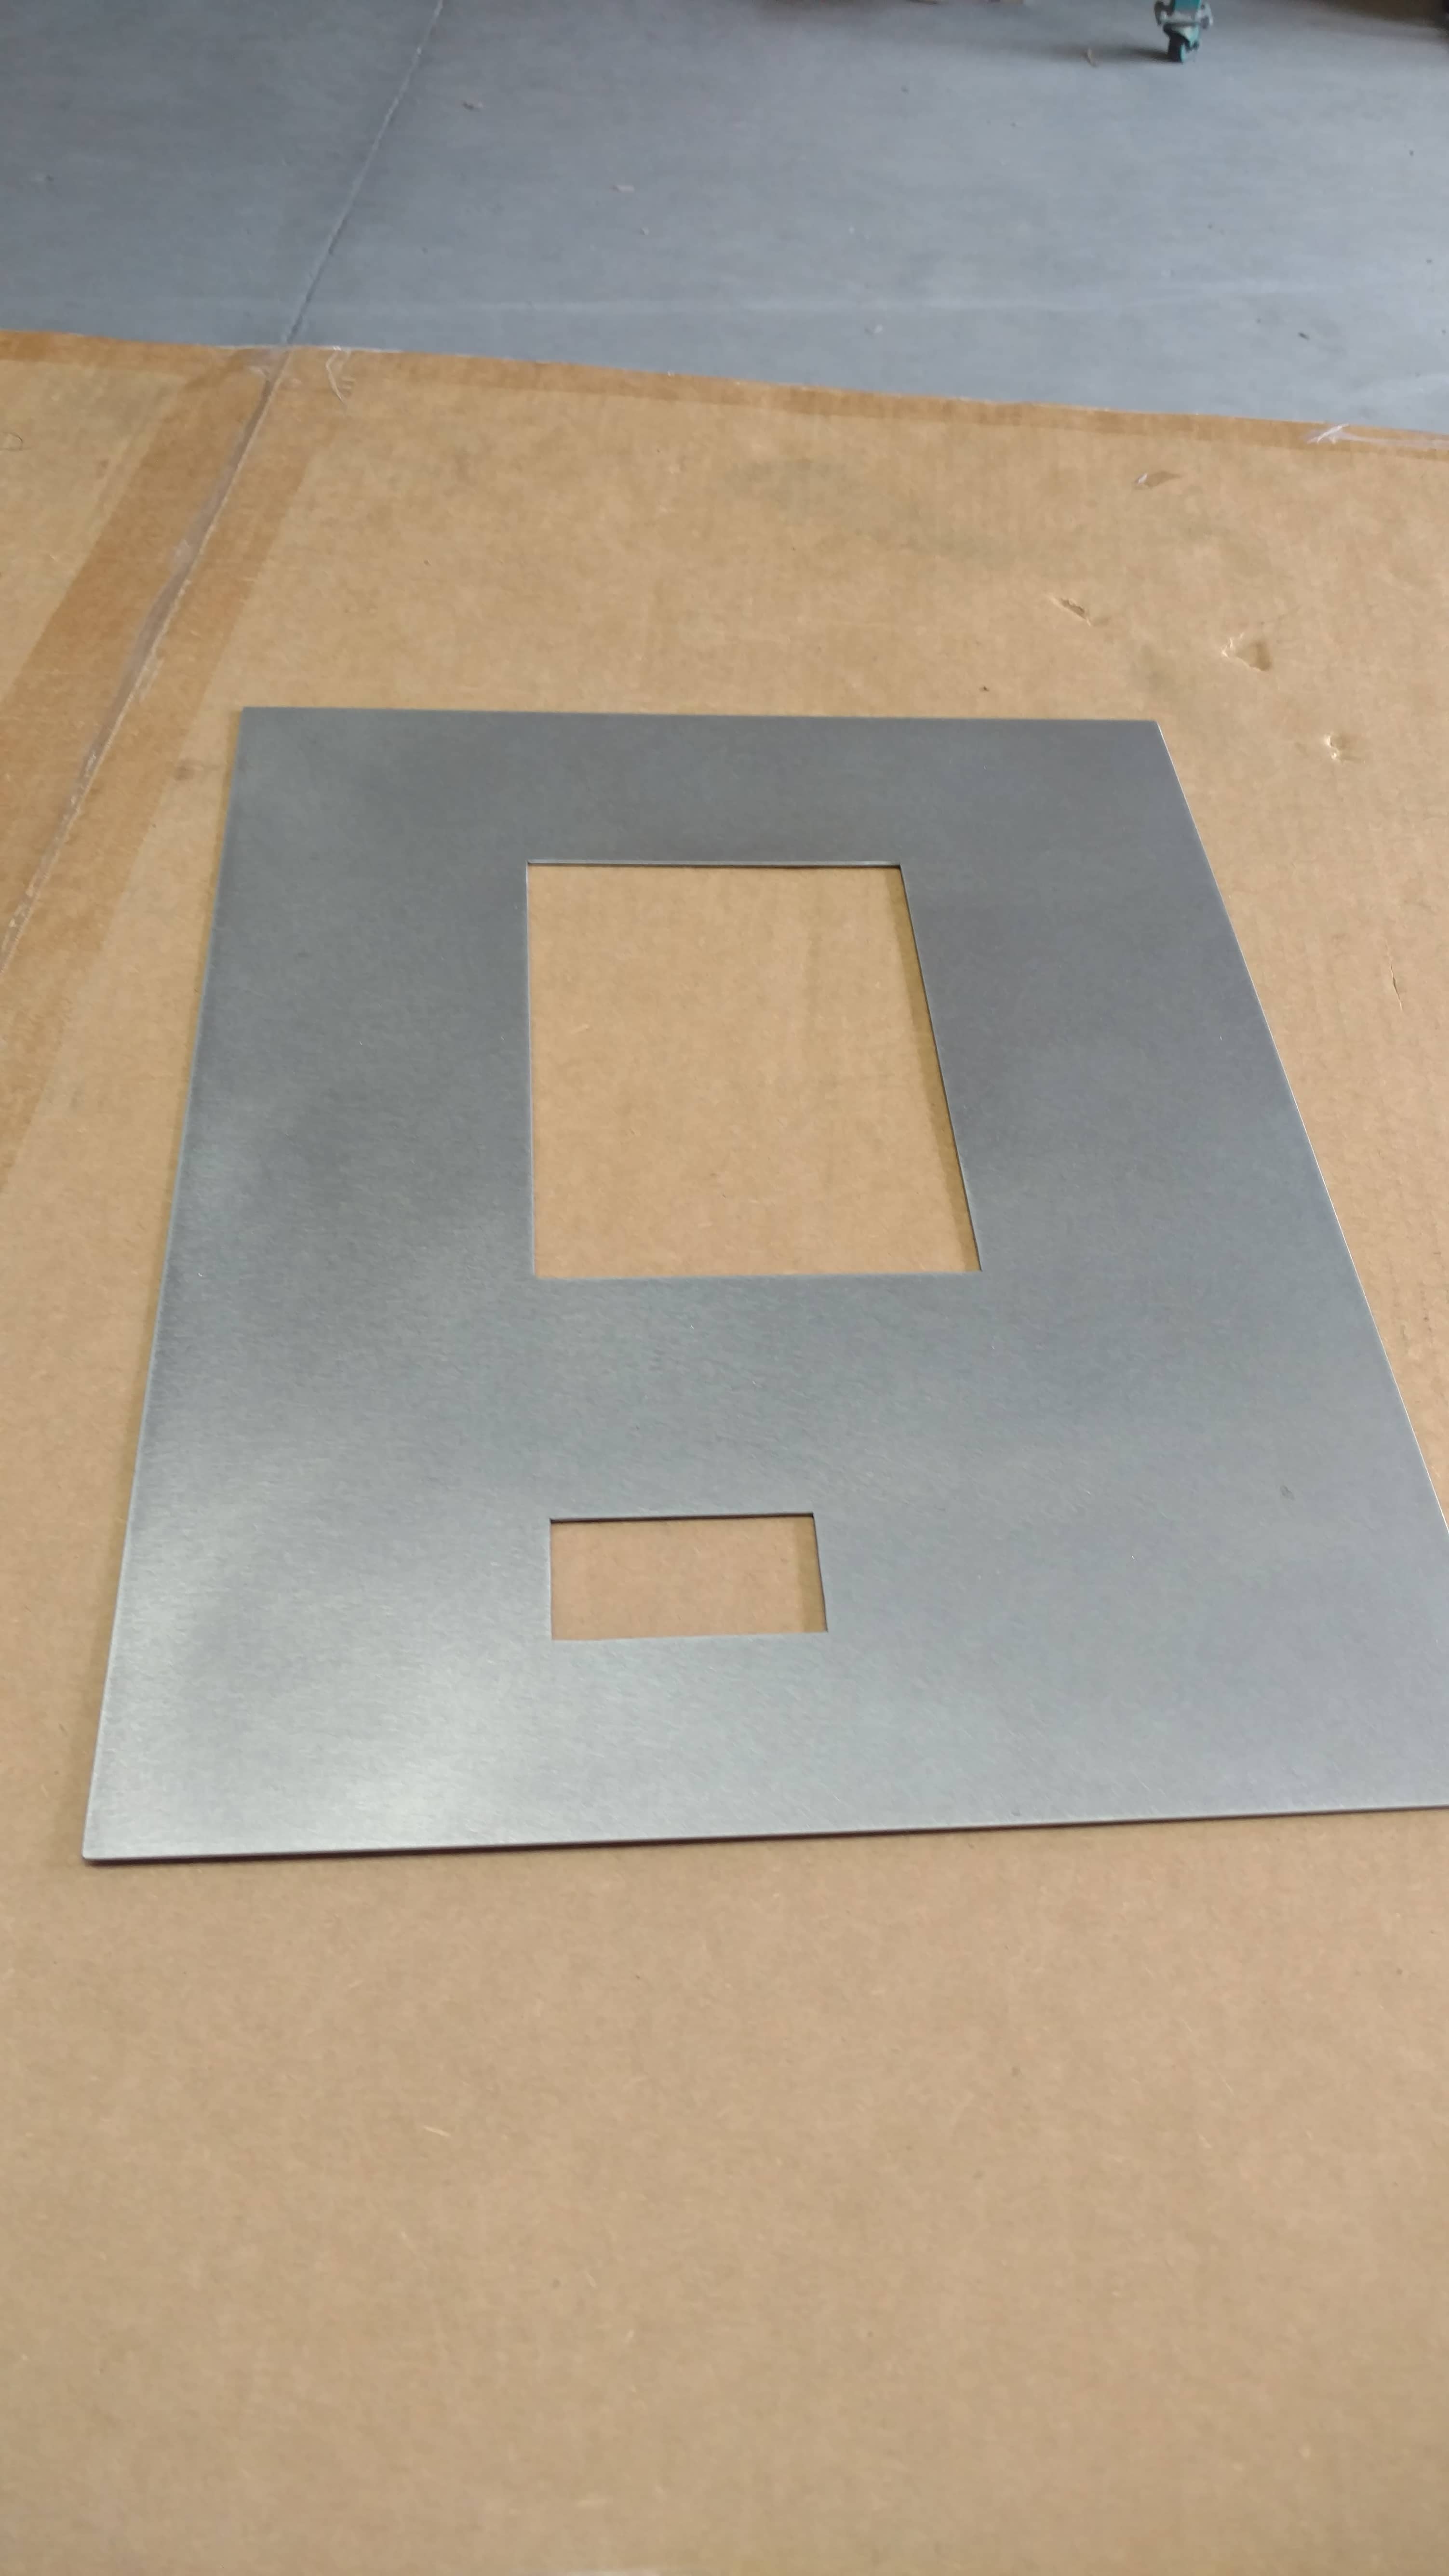 Stainless Steel, sheet metal sign